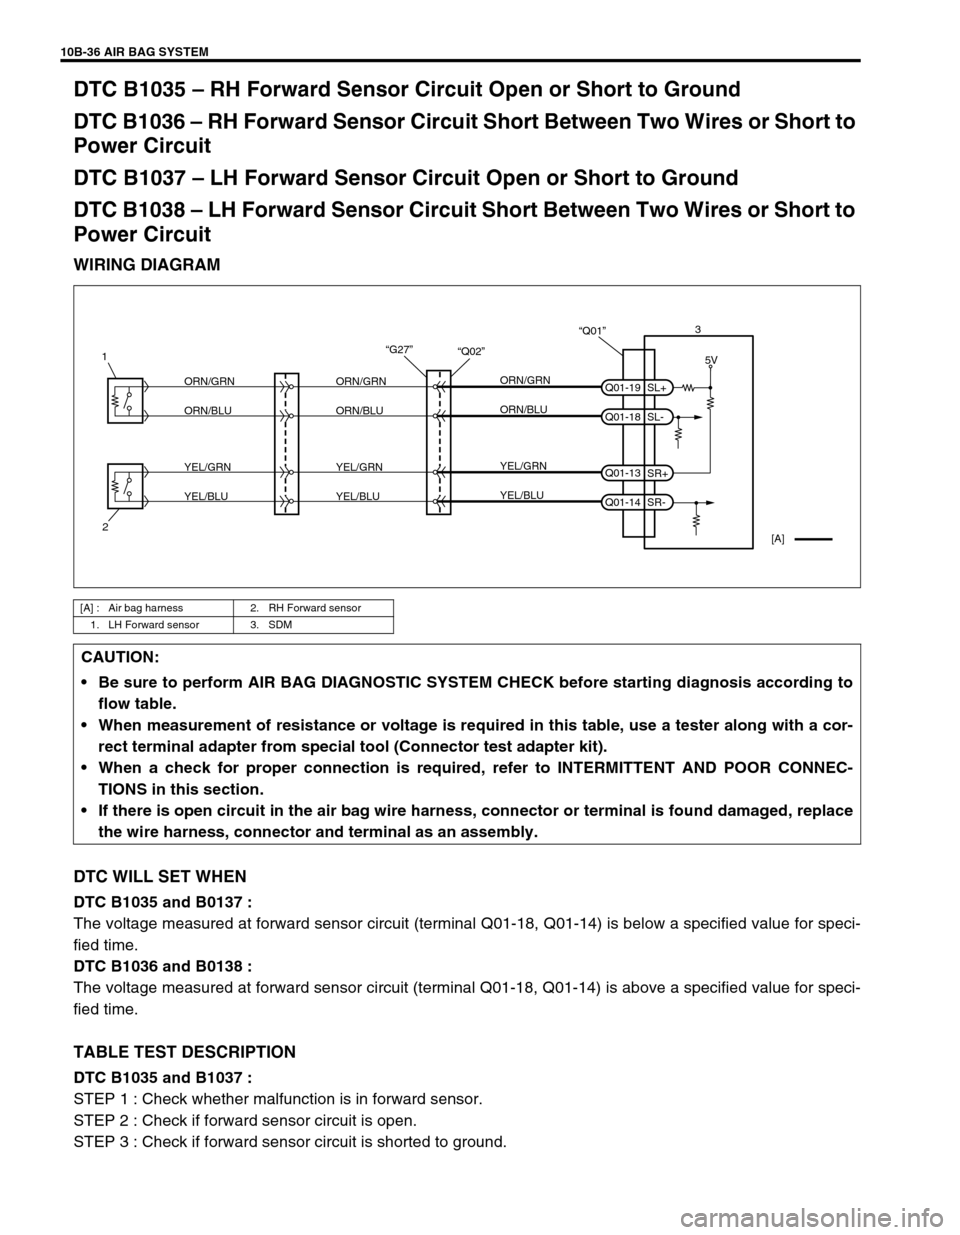 SUZUKI GRAND VITARA 1999 2.G Workshop Manual 10B-36 AIR BAG SYSTEM
DTC B1035 – RH Forward Sensor Circuit Open or Short to Ground
DTC B1036 – RH Forward Sensor Circuit Short Between Two Wires or Short to 
Power Circuit
DTC B1037 – LH Forwar